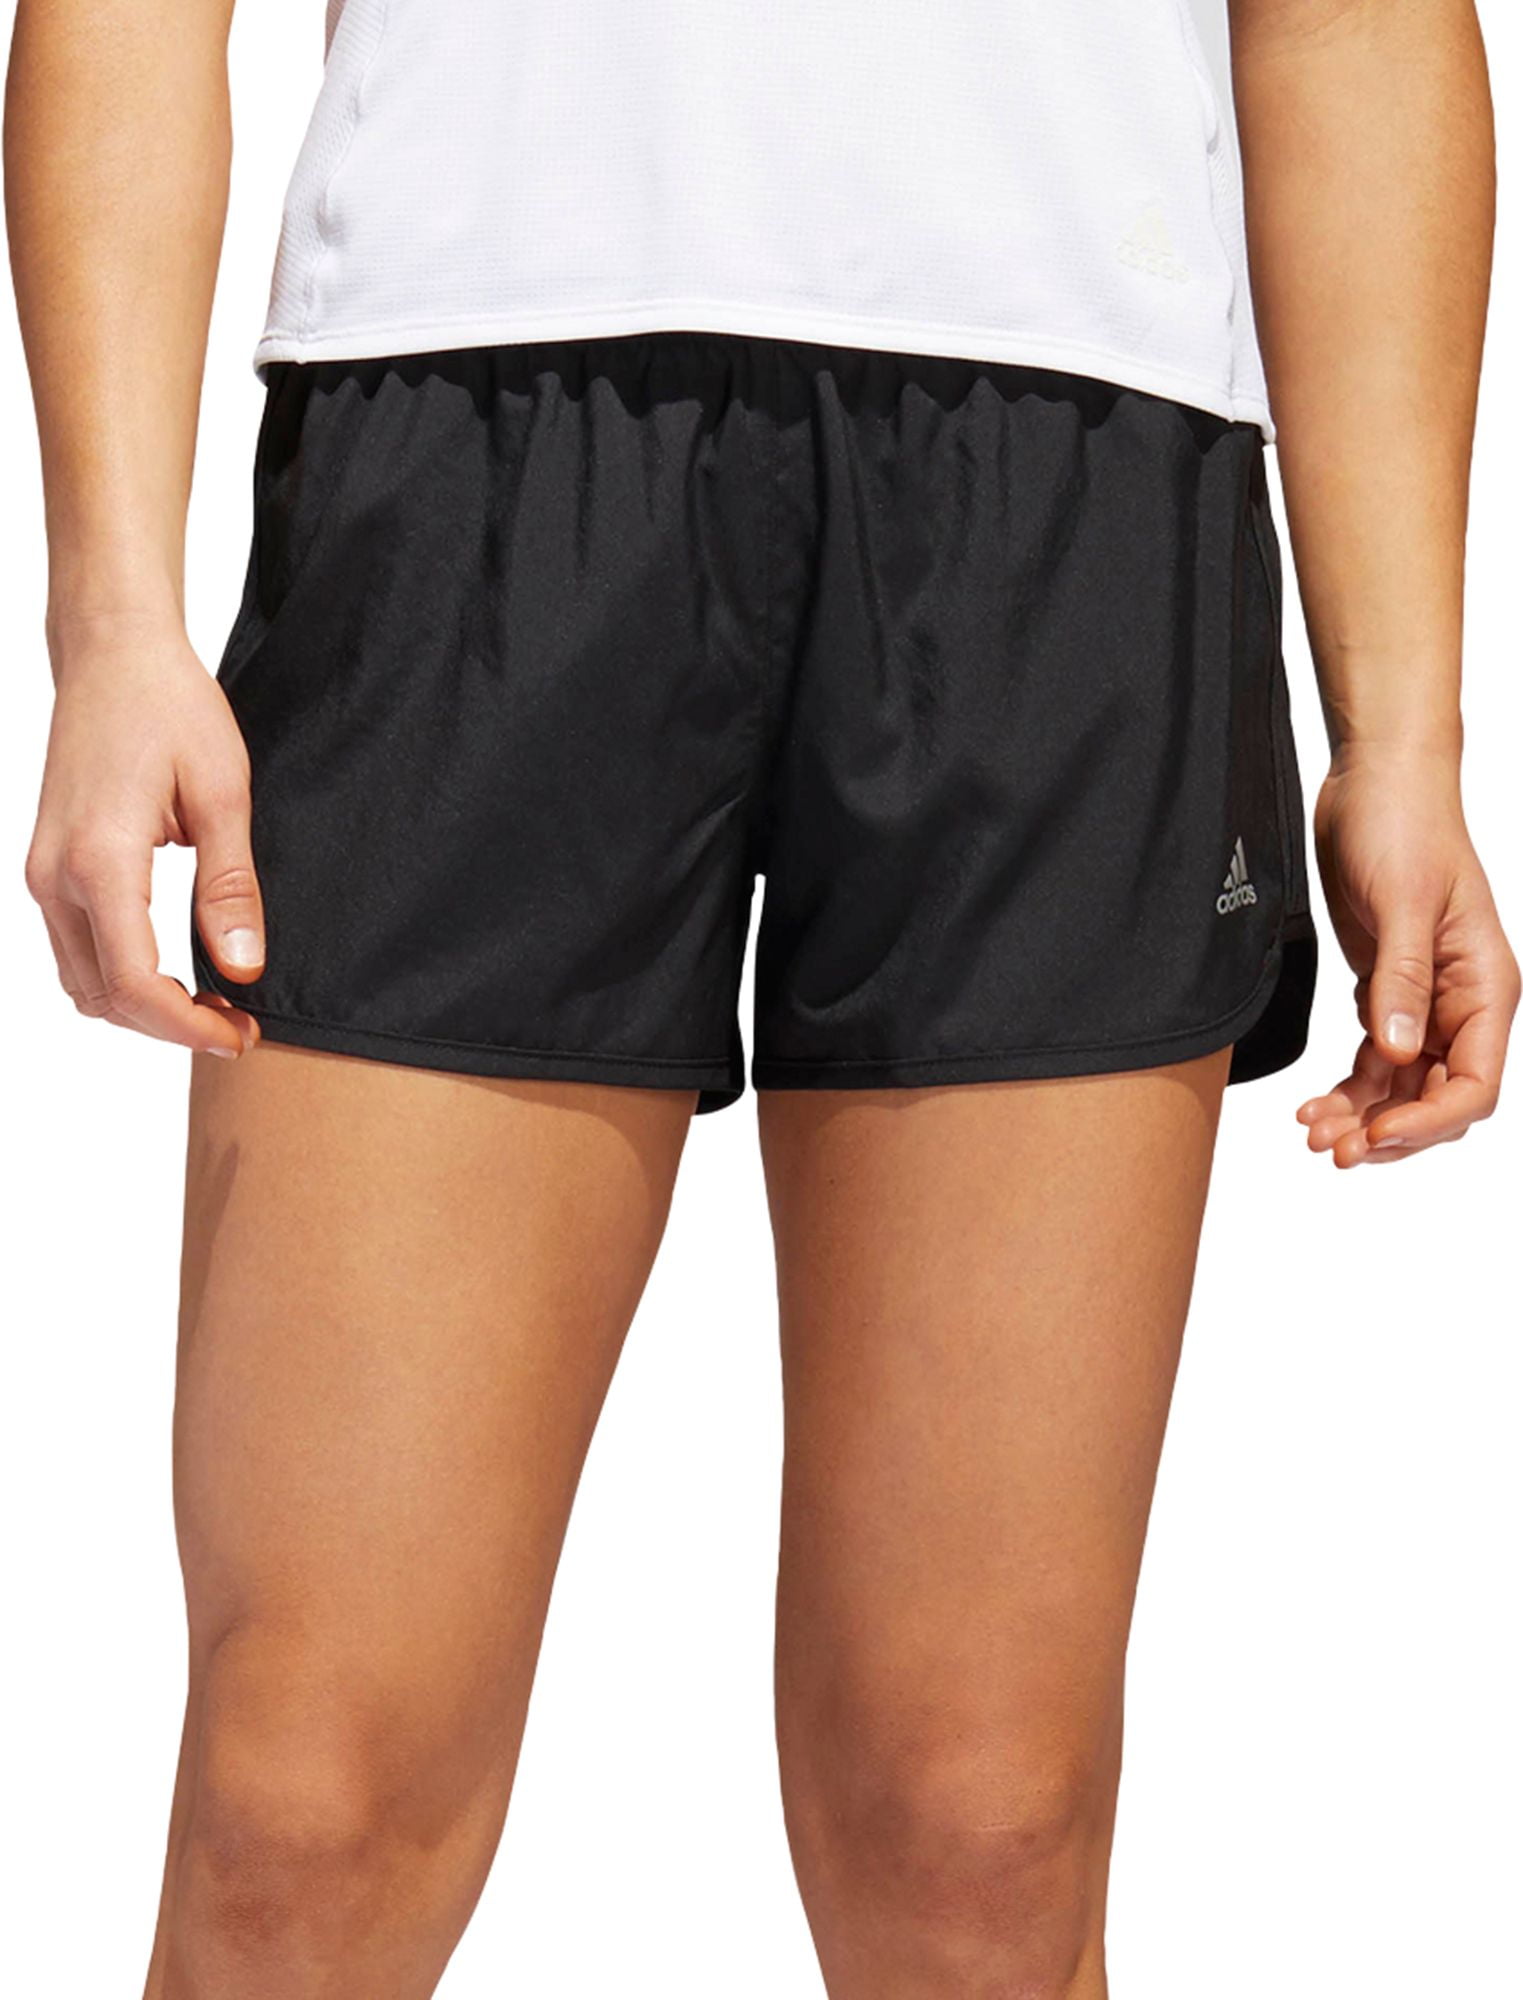 adidas women's training shorts